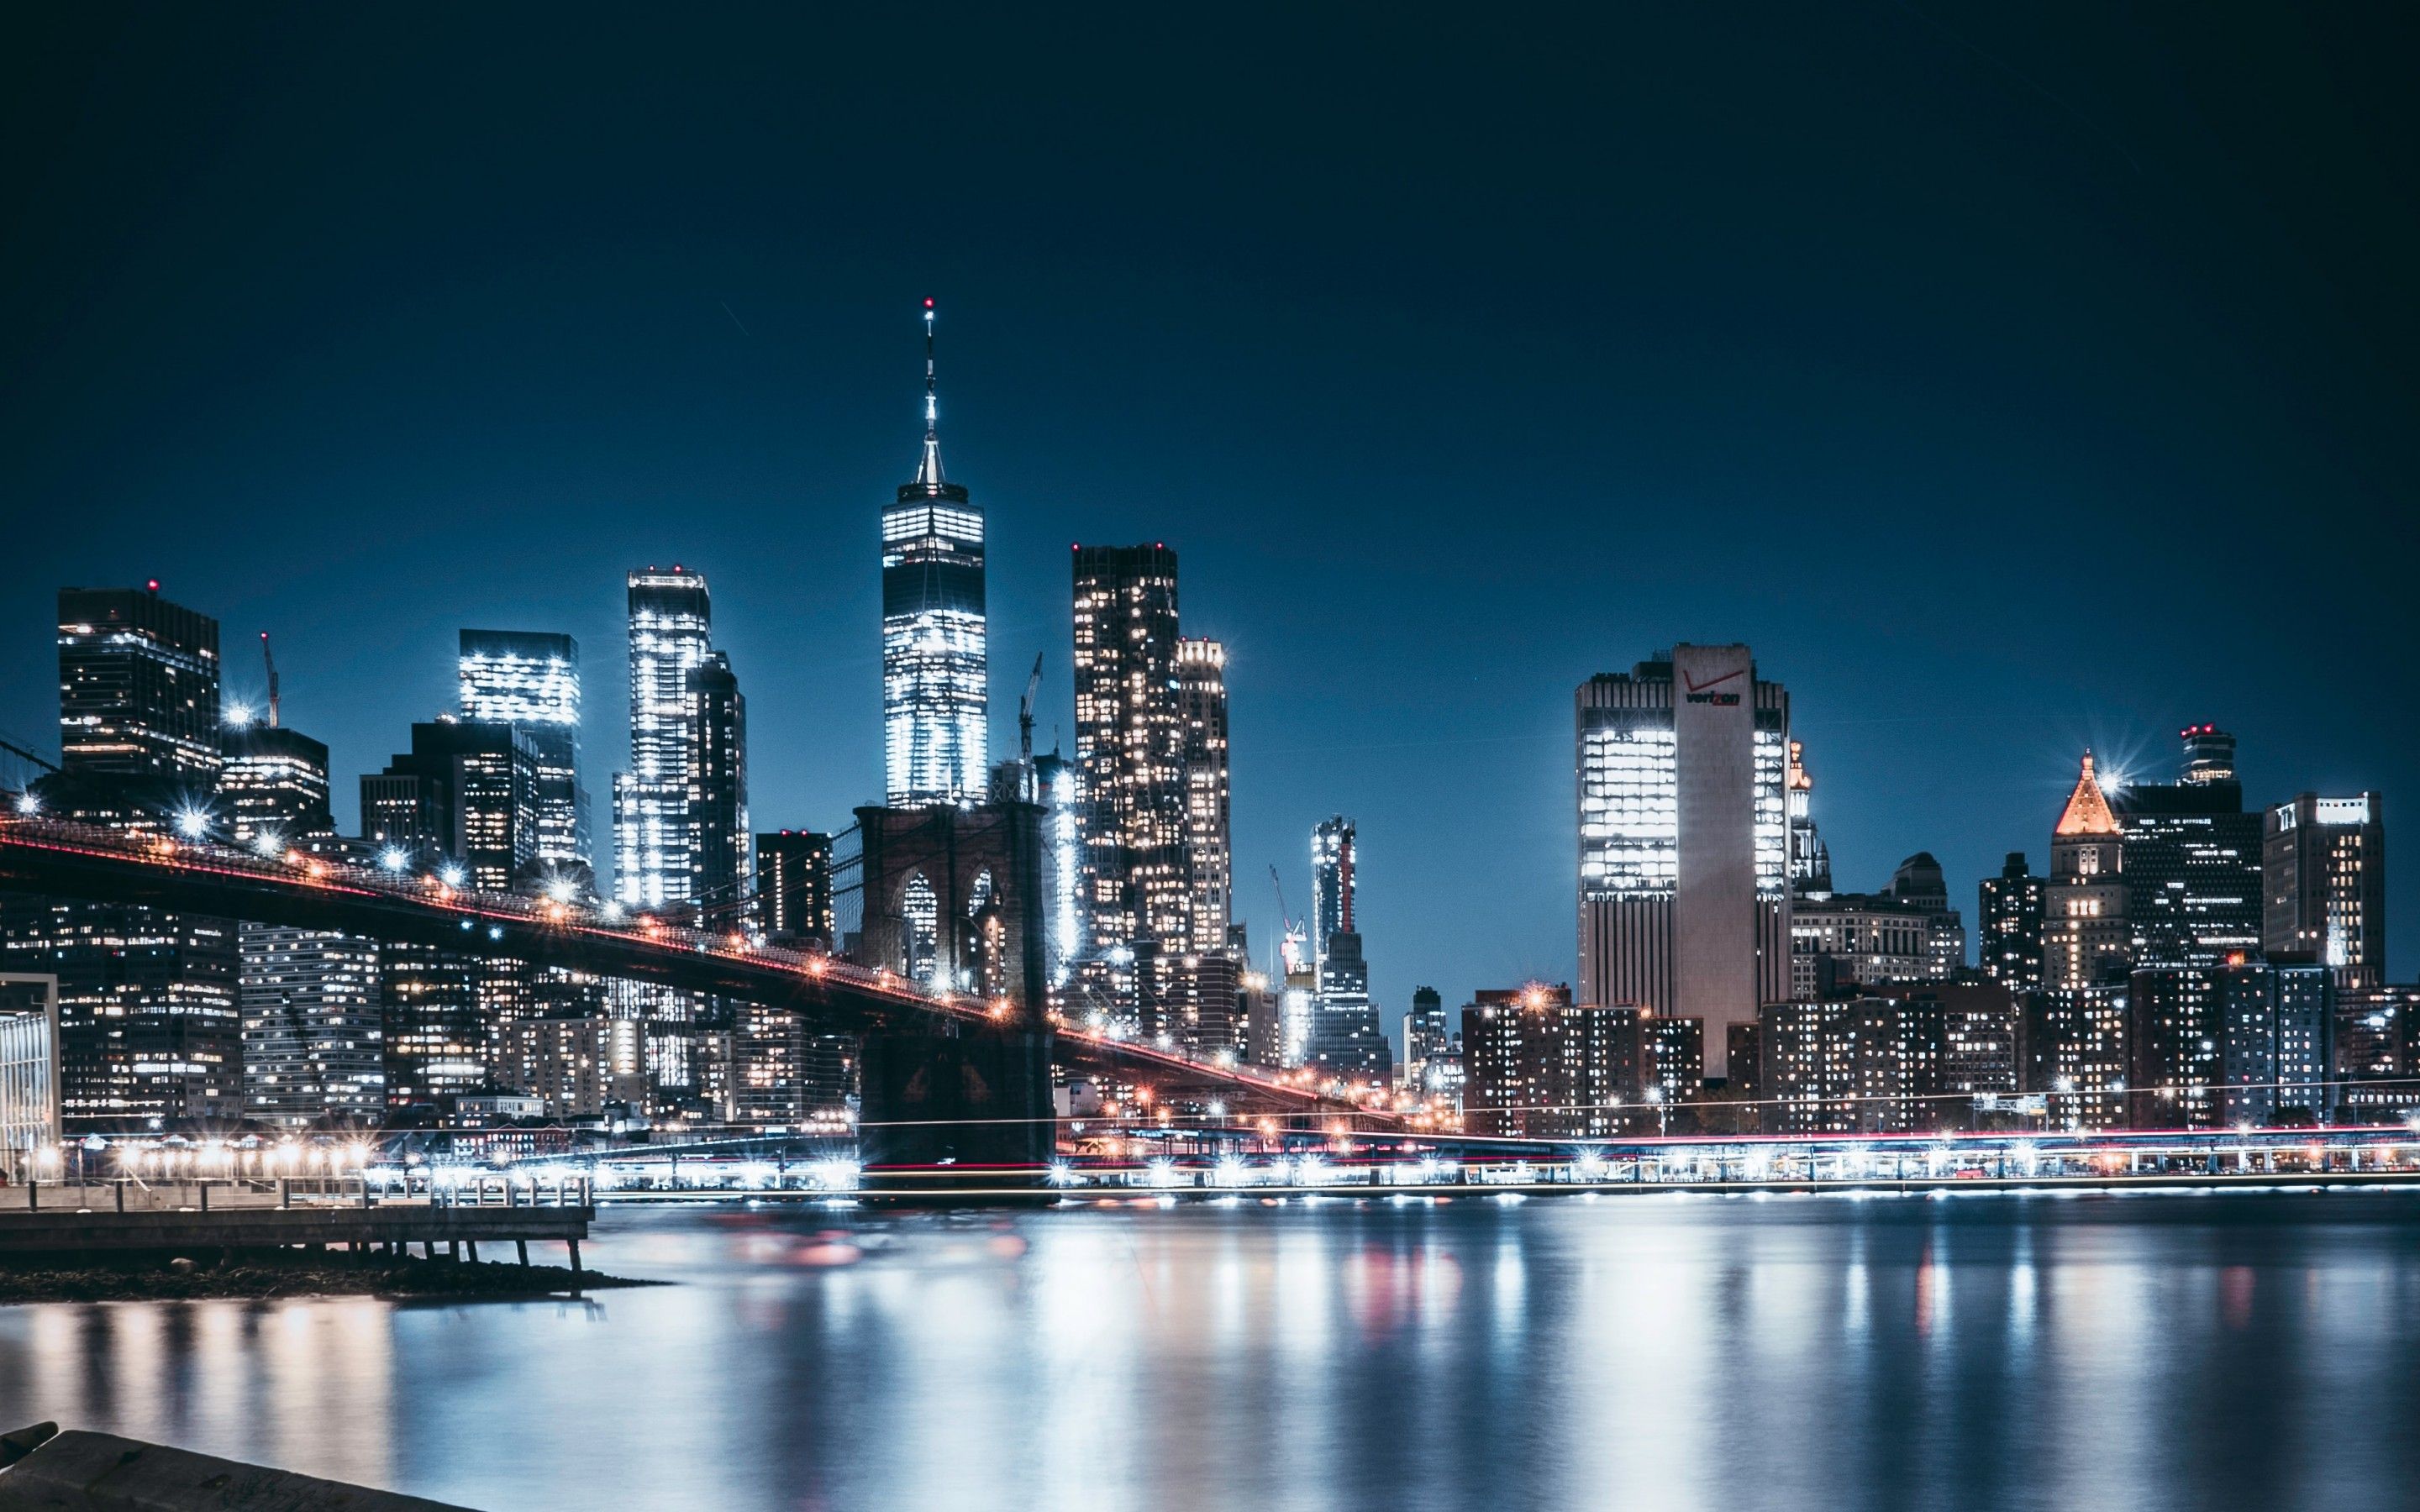 Brooklyn Bridge 4K Wallpaper, Night, City lights, Cityscape, Reflections, Brooklyn, New York, USA, World